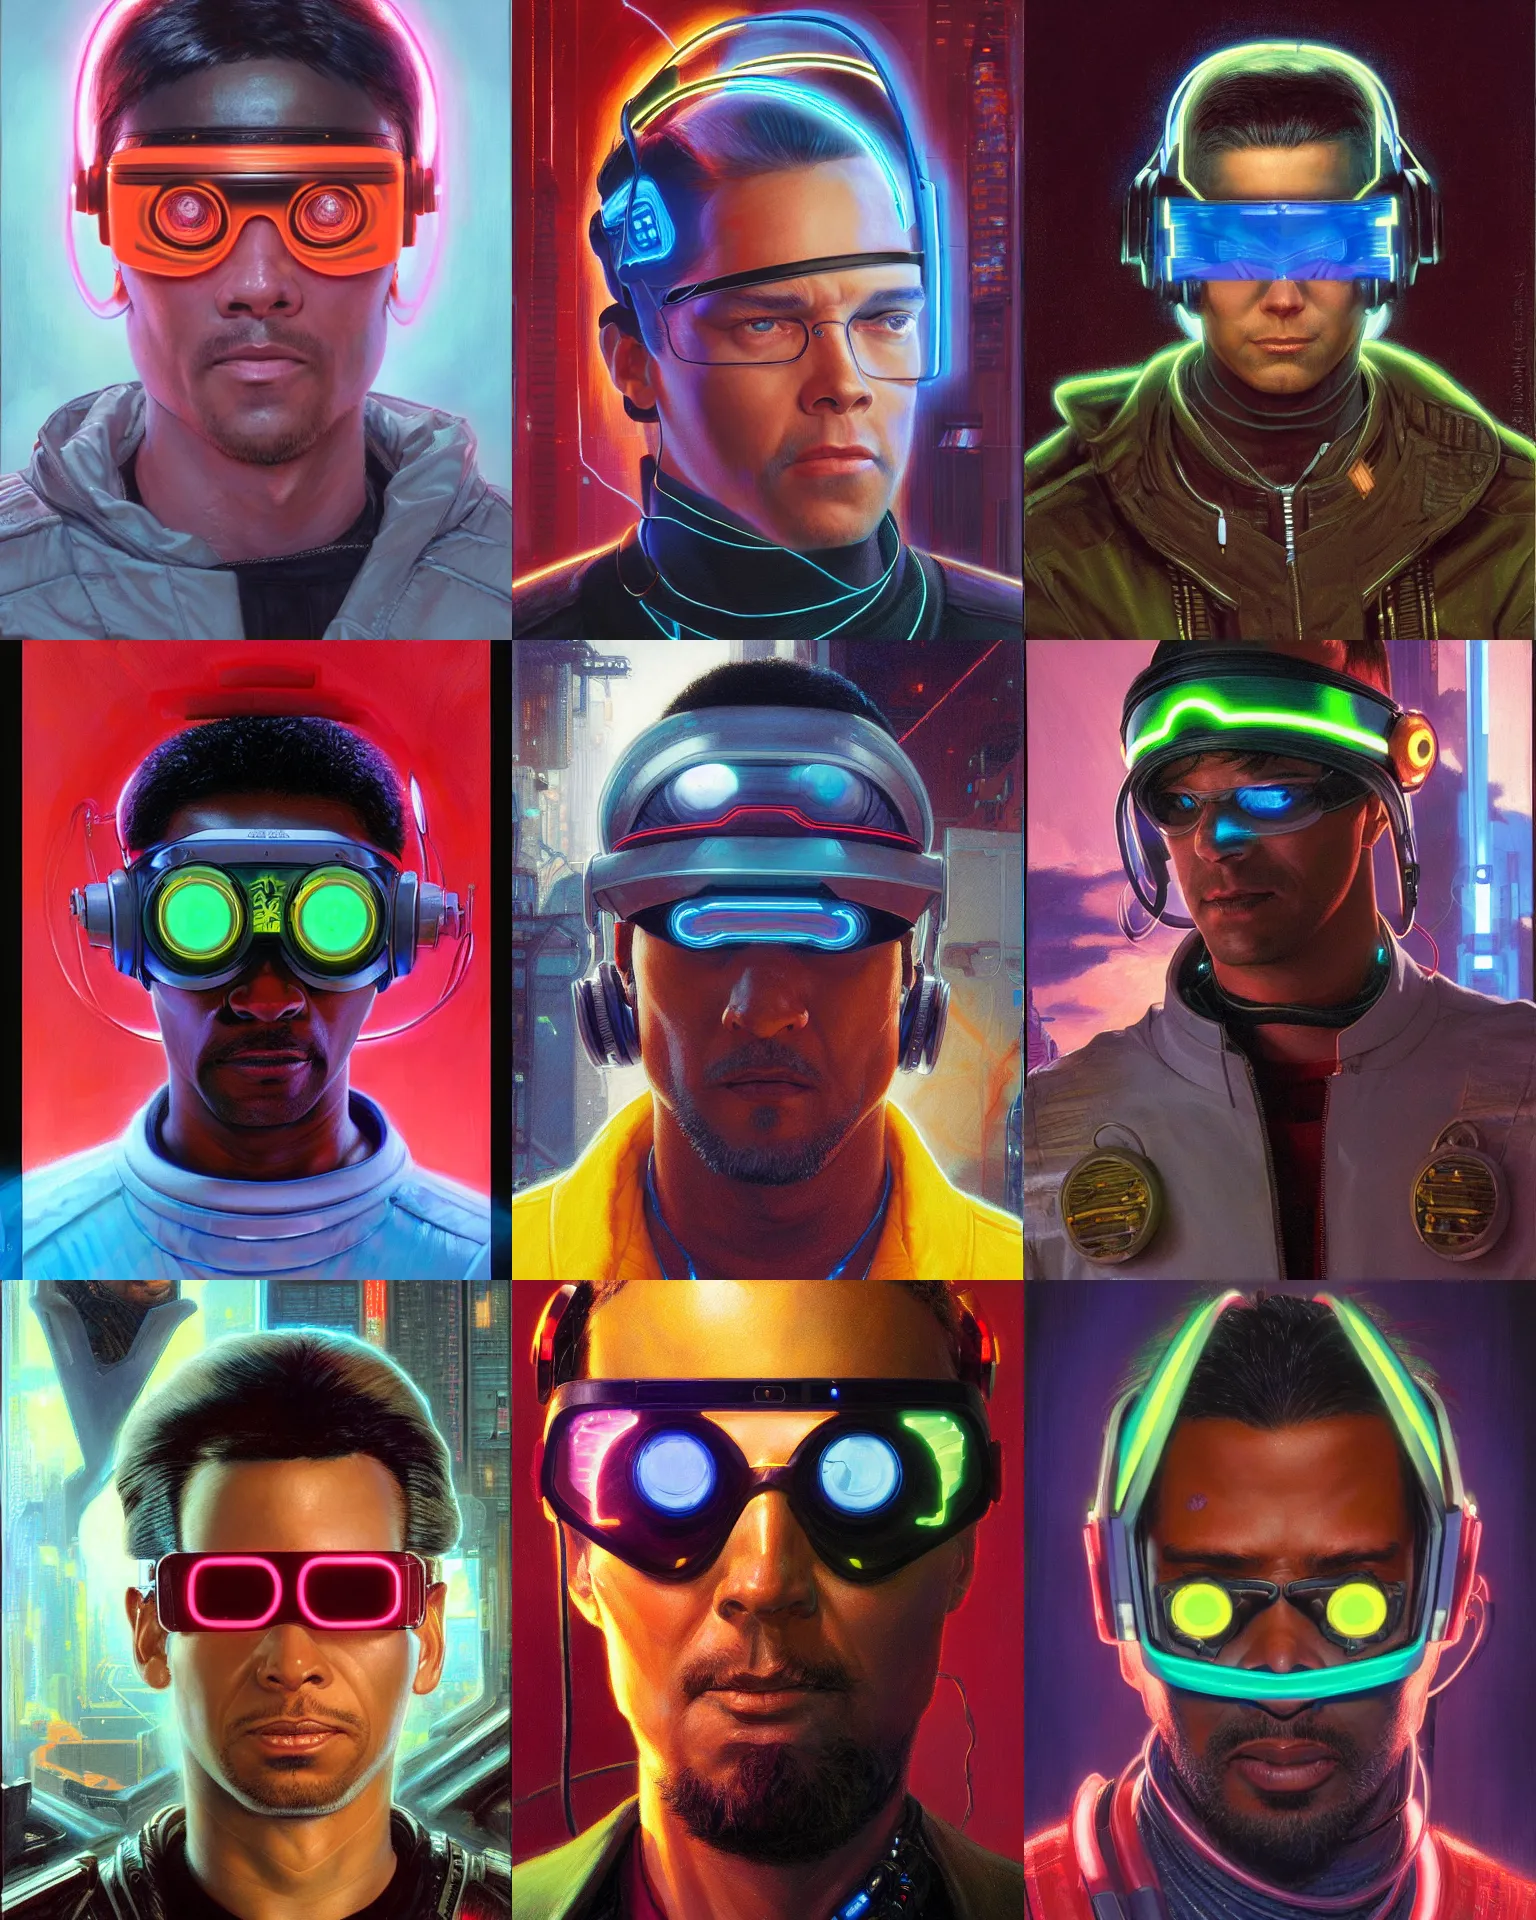 Prompt: digital neon cyberpunk male with geordi eye visor and headset headshot portrait painting by donato giancola, kilian eng, john berkley, hayao miyazaki, j. c. leyendecker, mead schaeffer